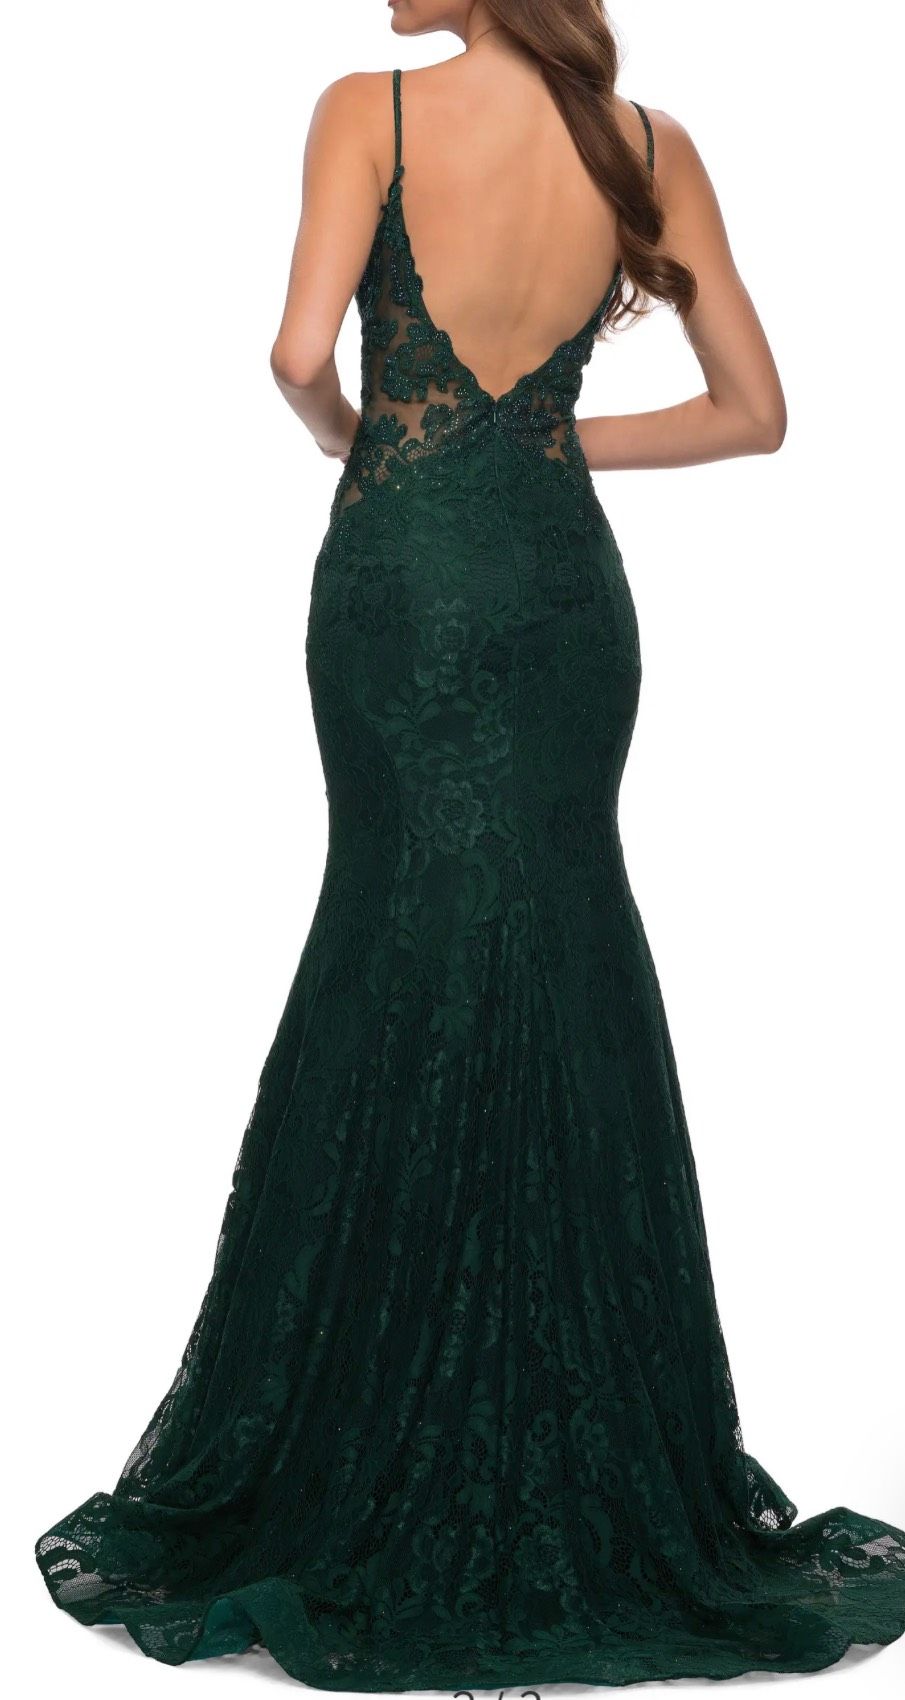 La Femme Size 4 Prom Plunge Emerald Green Mermaid Dress on Queenly